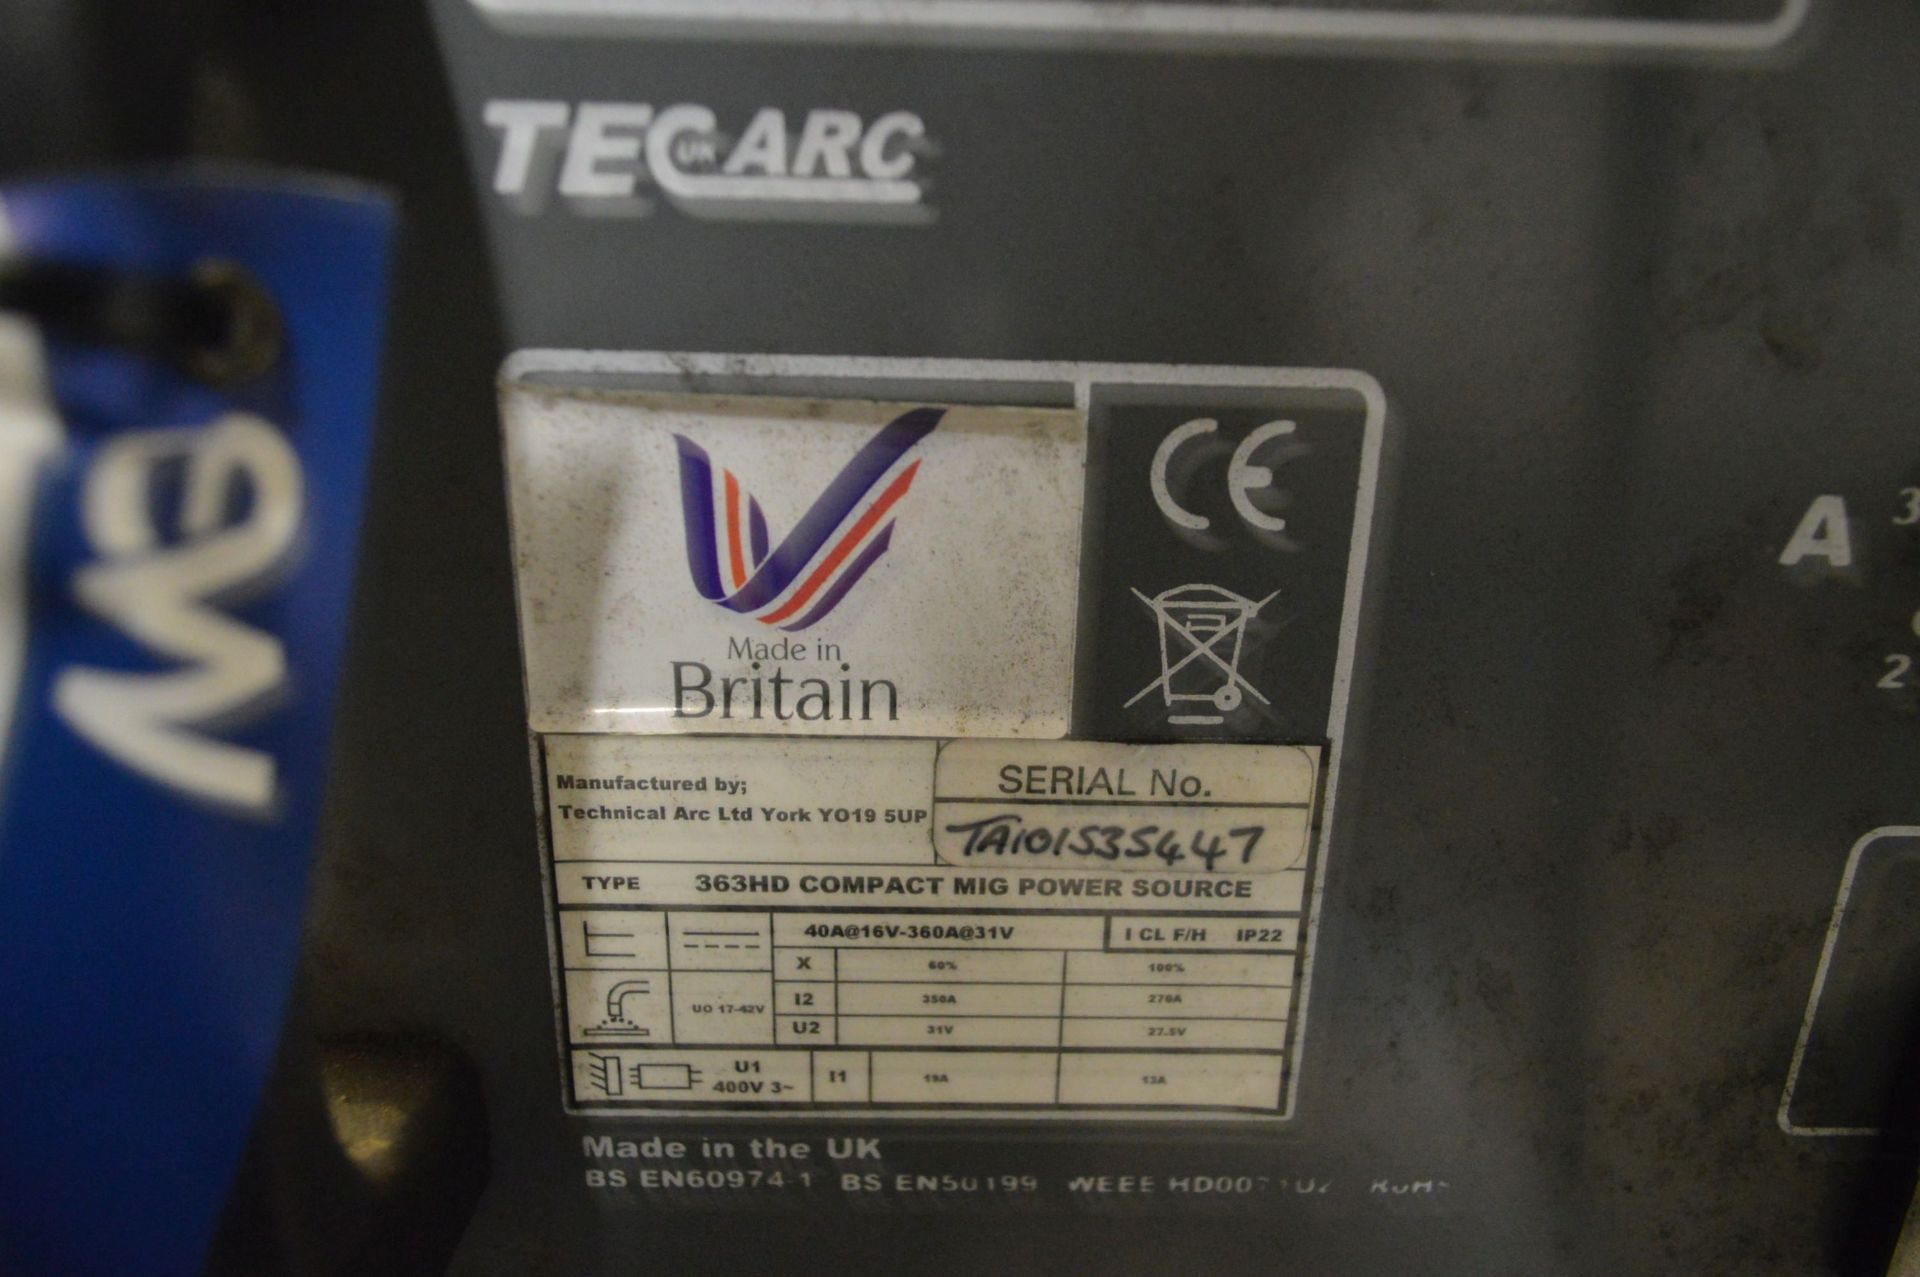 Tecarc T-MIG 363HD COMPACT MIG POWER SOURCE, serial no. TA101535447 - Bild 3 aus 3